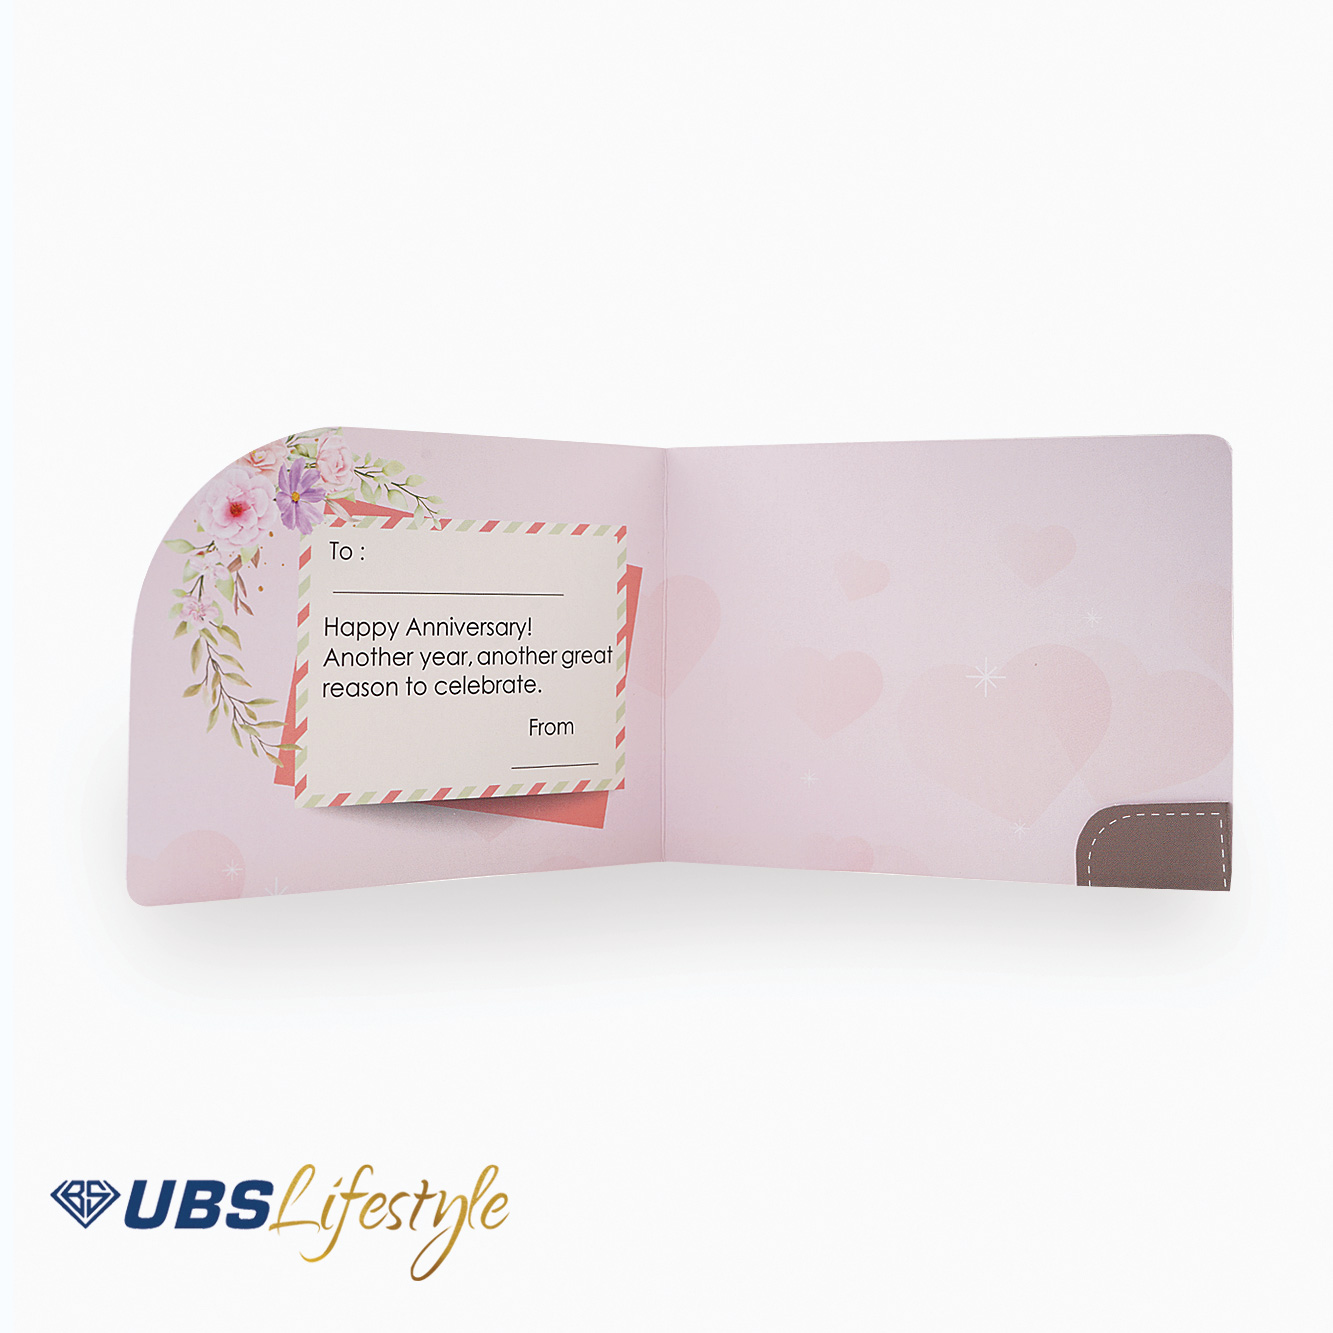 Kartu Ucapan UBS Lifestyle Edisi Anniversary - Yakkk0480